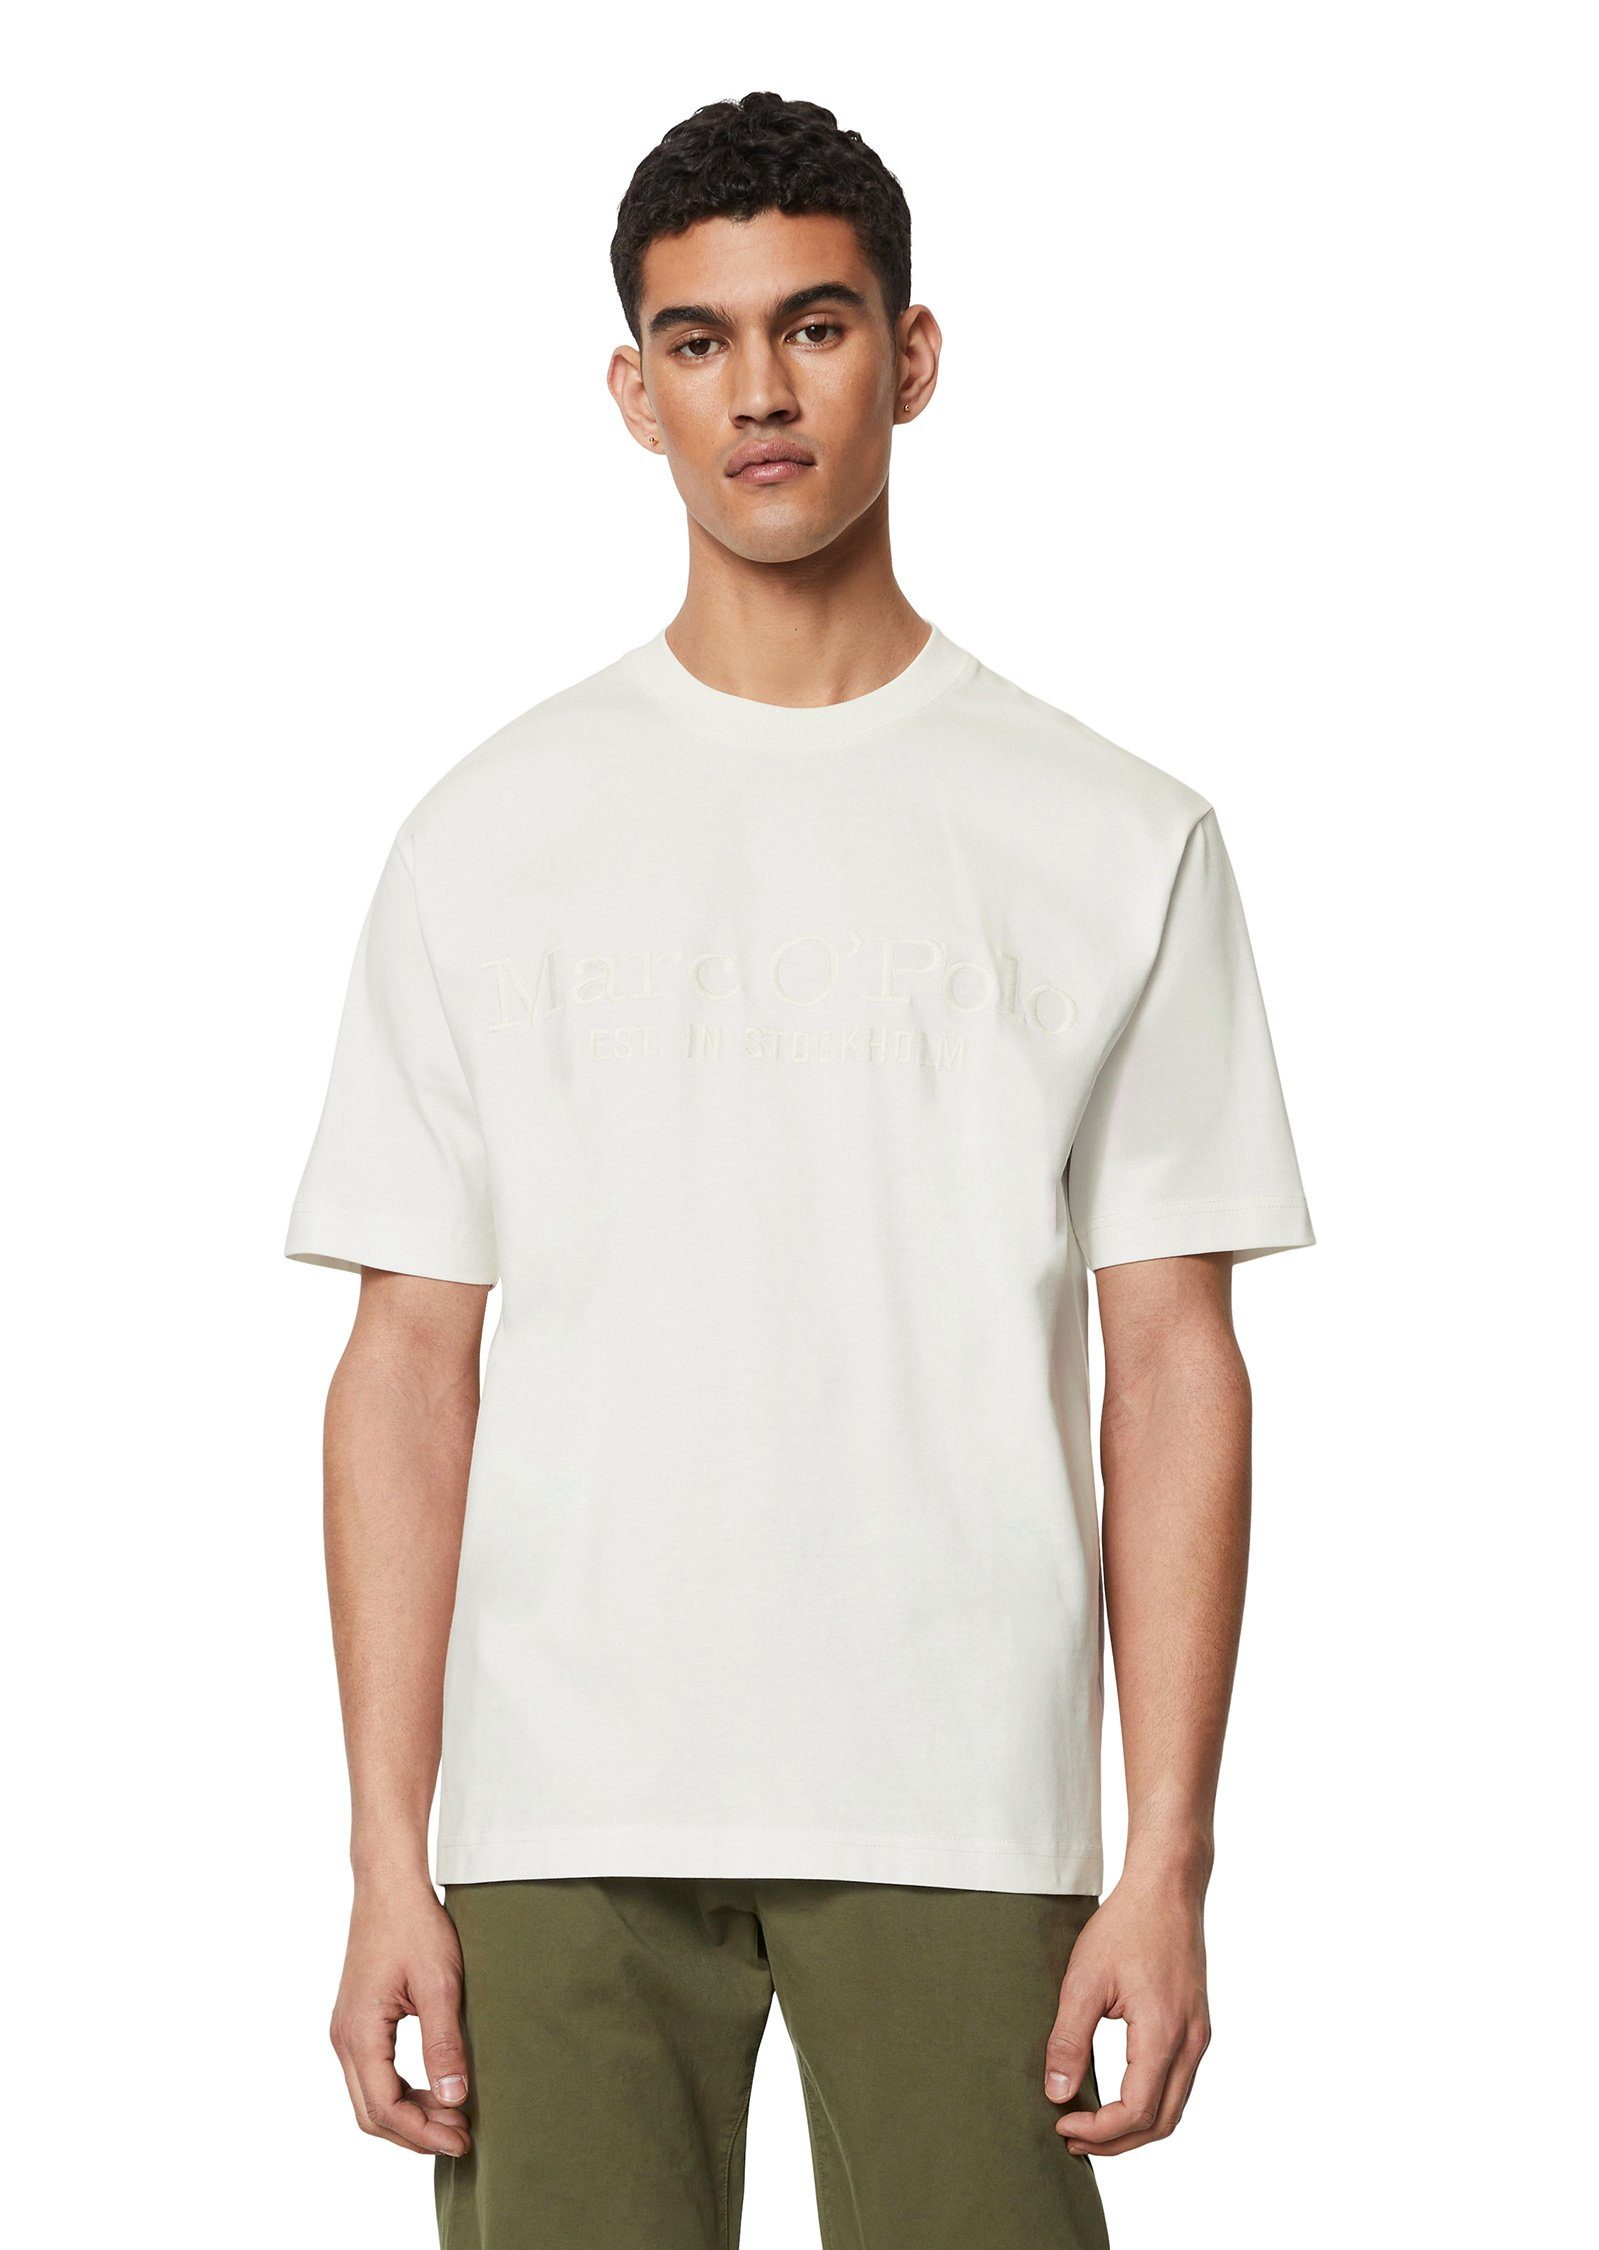 Marc O'Polo T-Shirt aus schwerer Bio-Baumwoll-Qualität